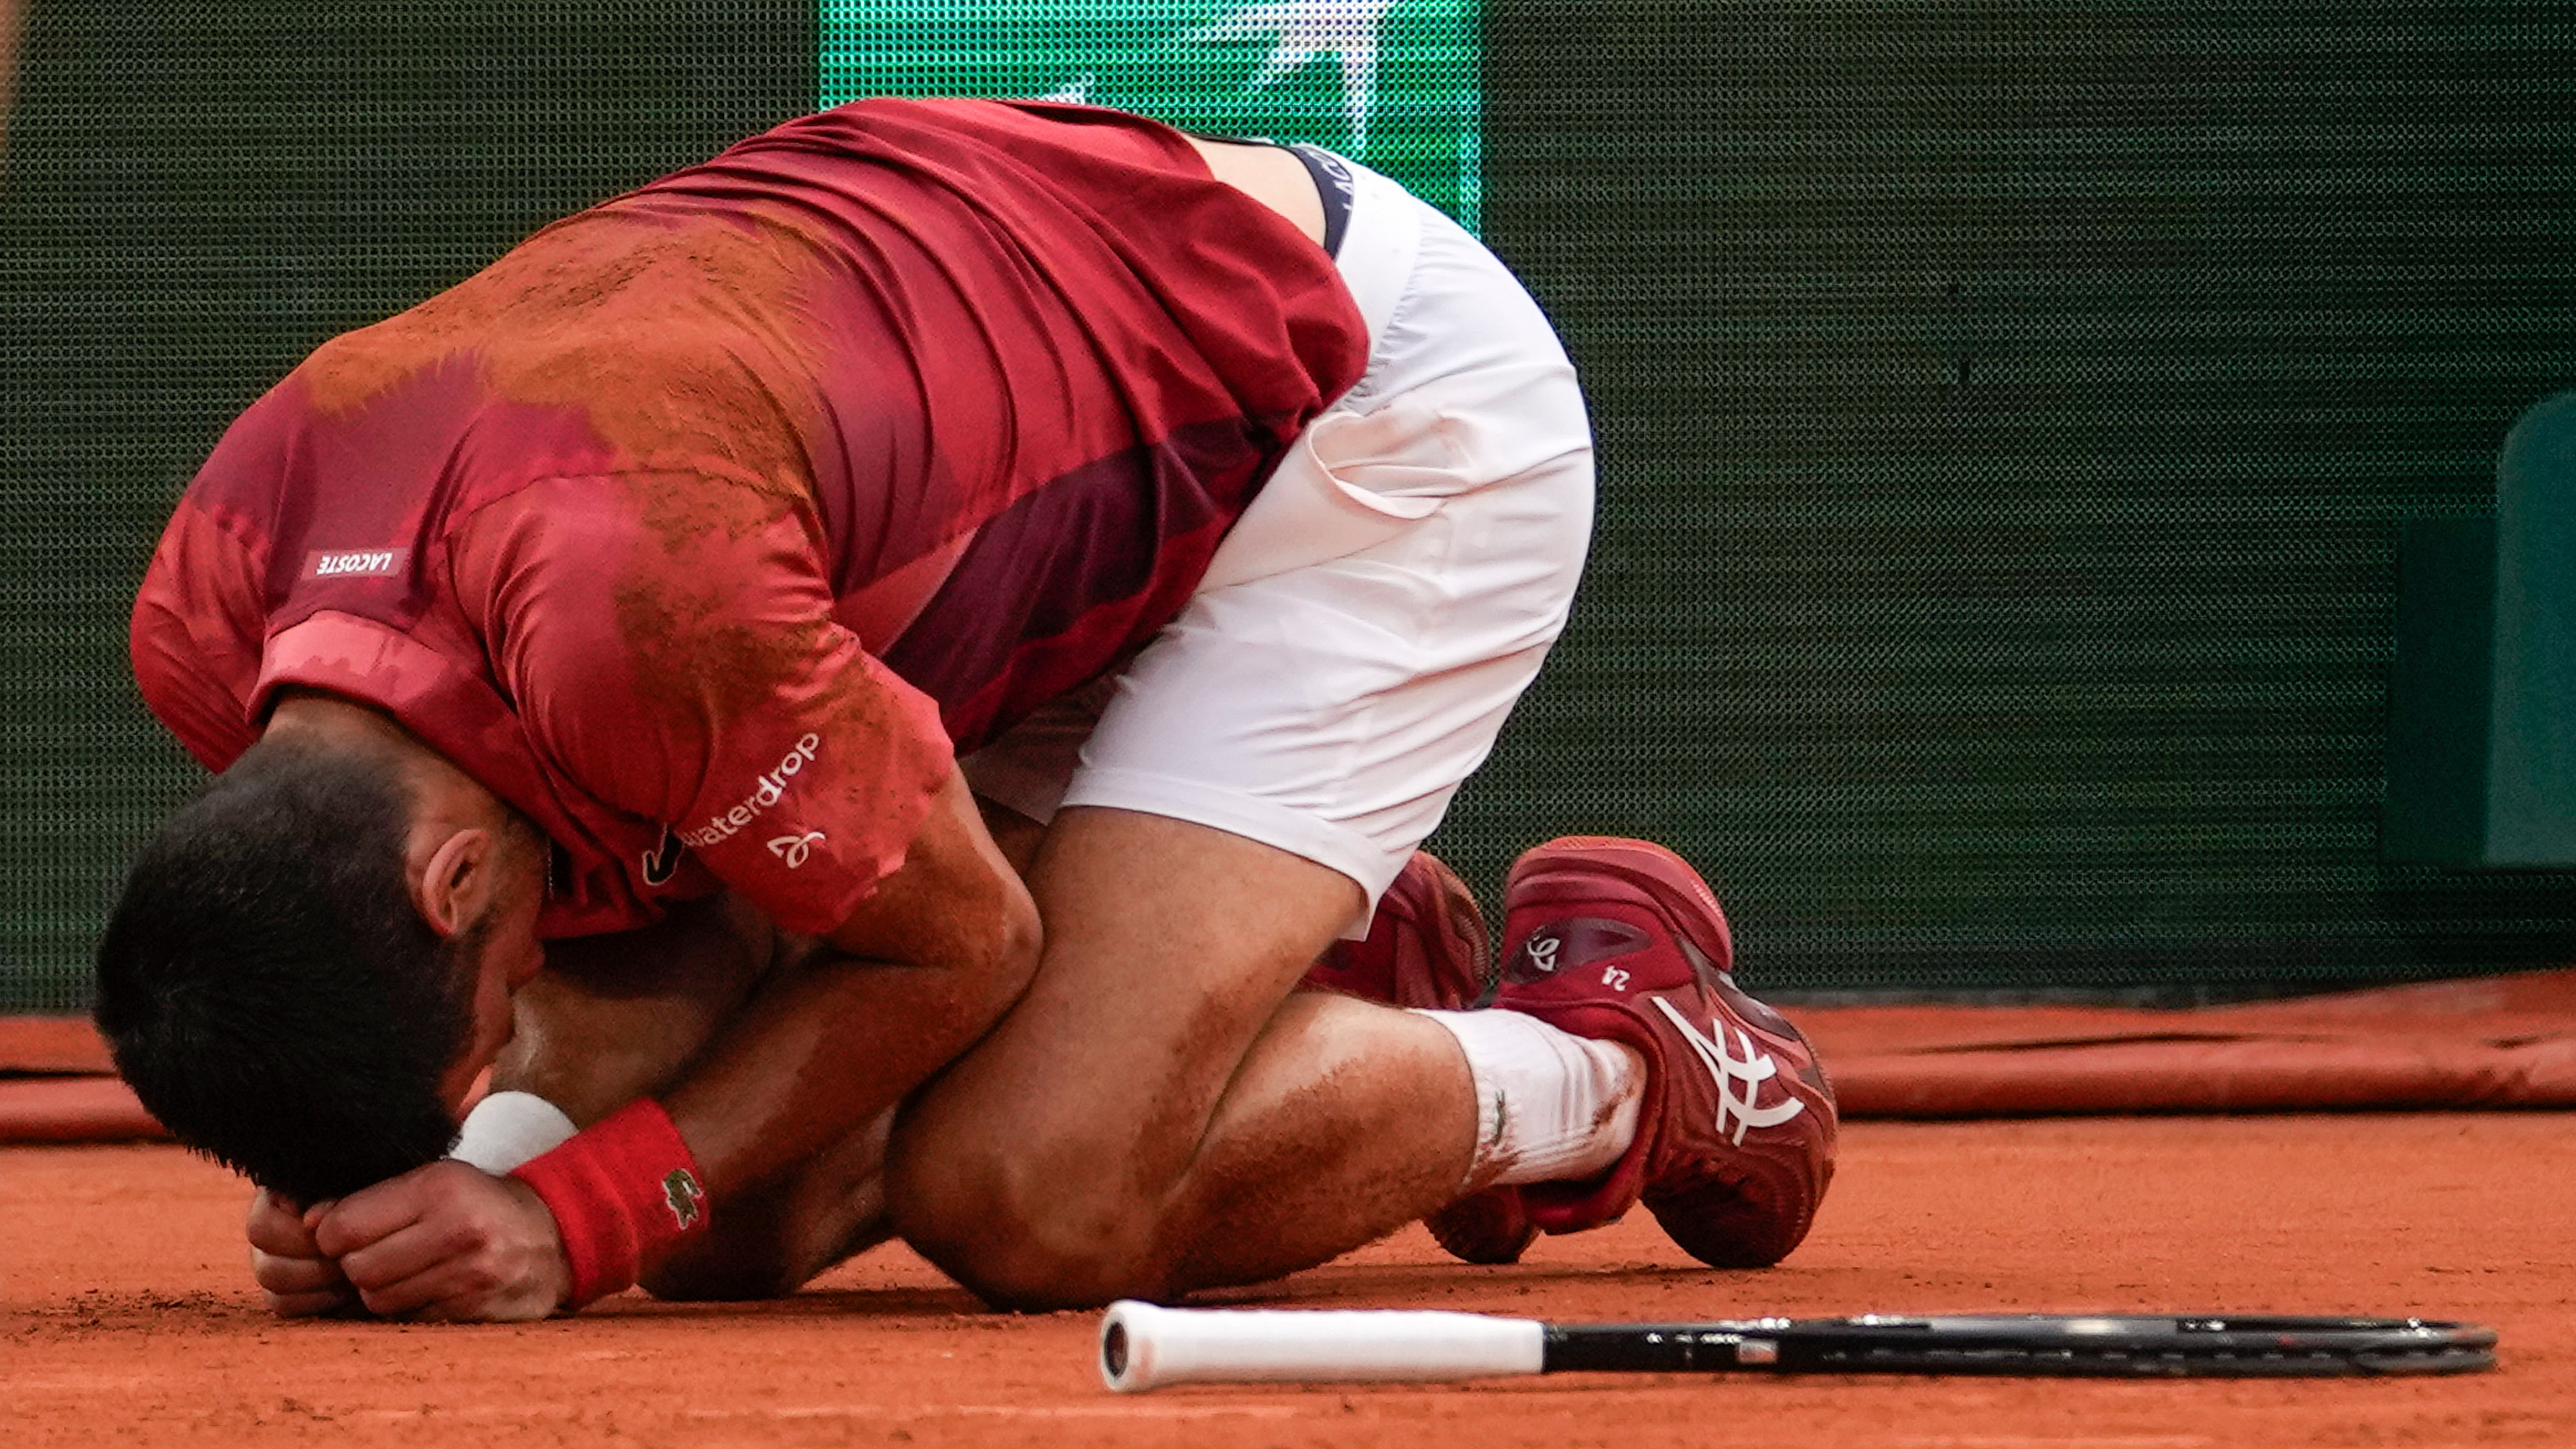 Novak Djokovic limps to quarter-finals after longest French Open match of career